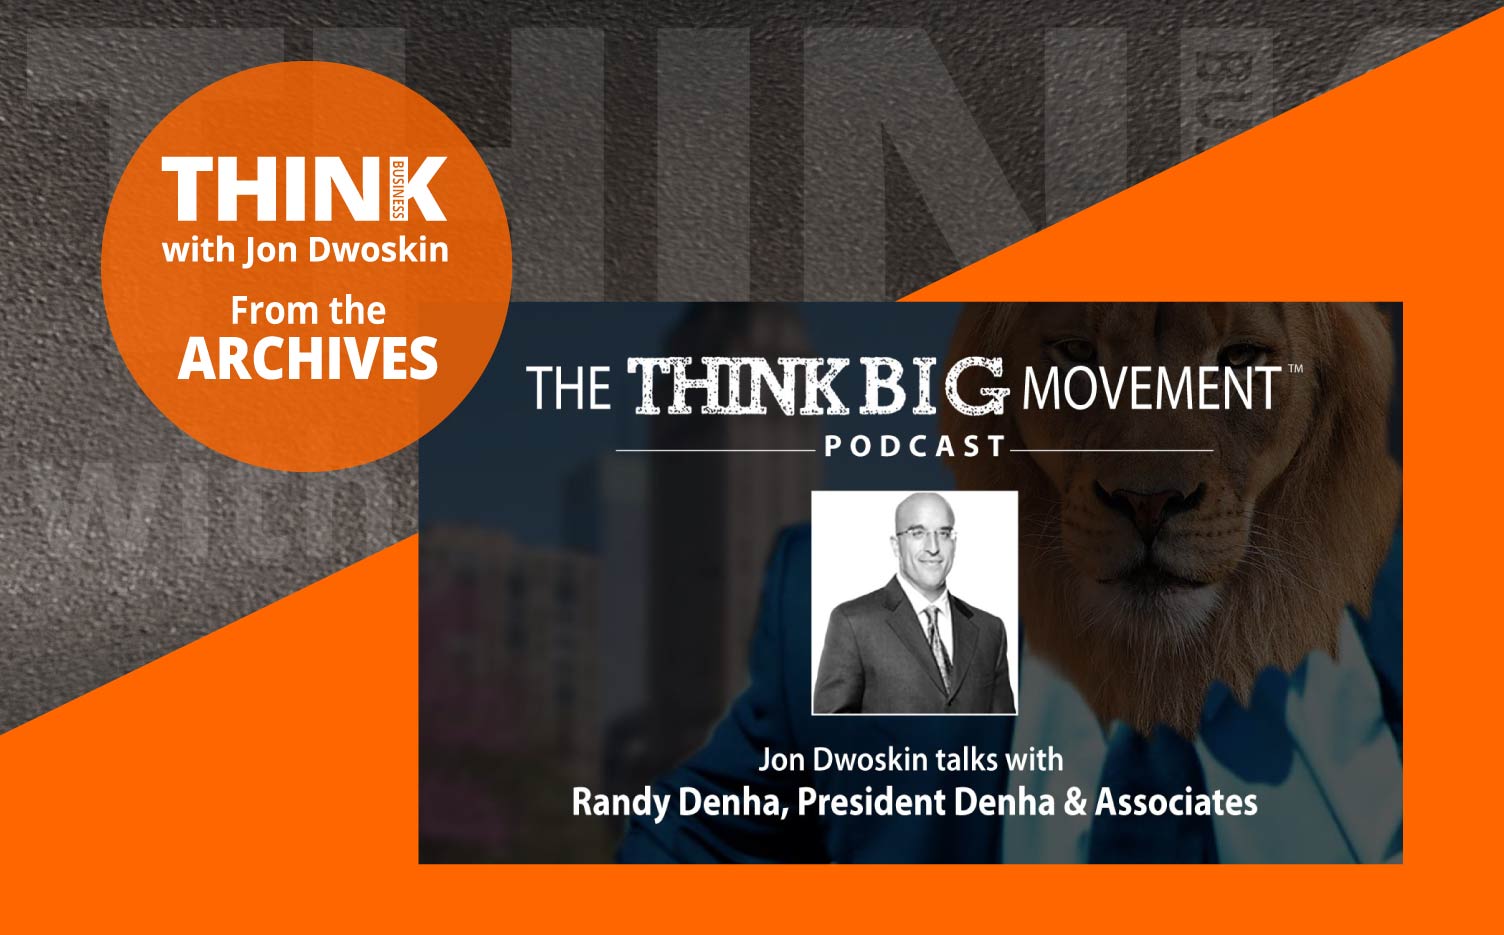 THINK Business Podcast: Jon Dwoskin Interviews Randall Denha, President of Denha & Associates